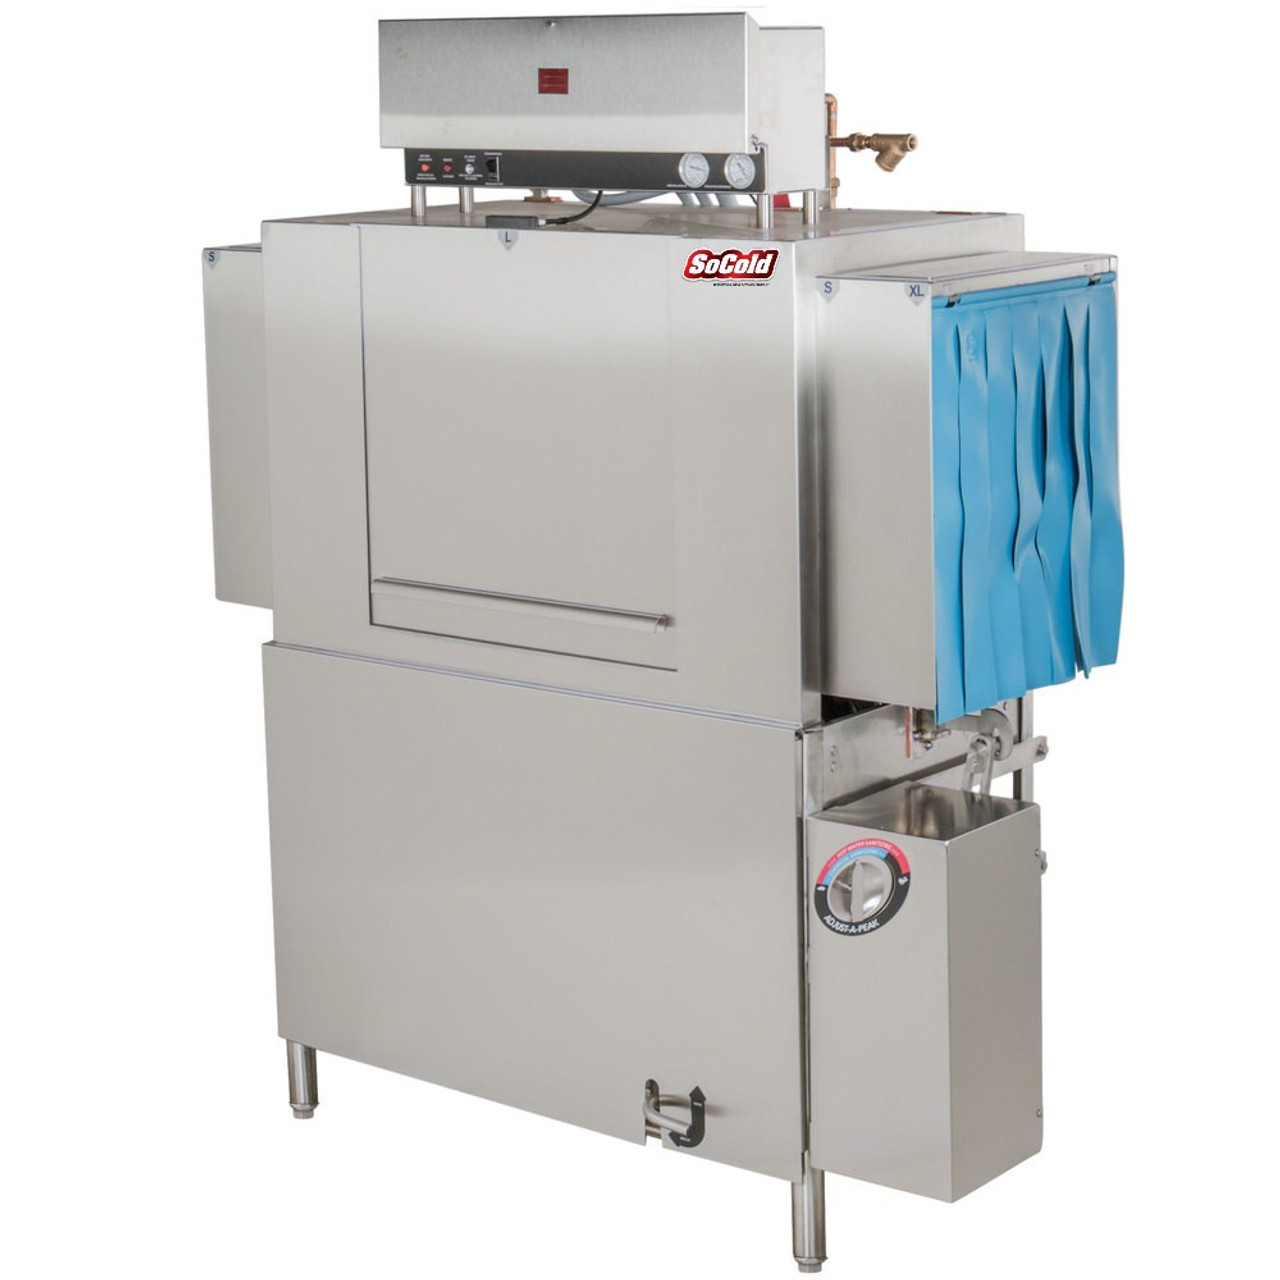 SoCold Warewashing 44 Conveyor High Temperature Dishwasher - Right to Left, 230V, 3 Phase